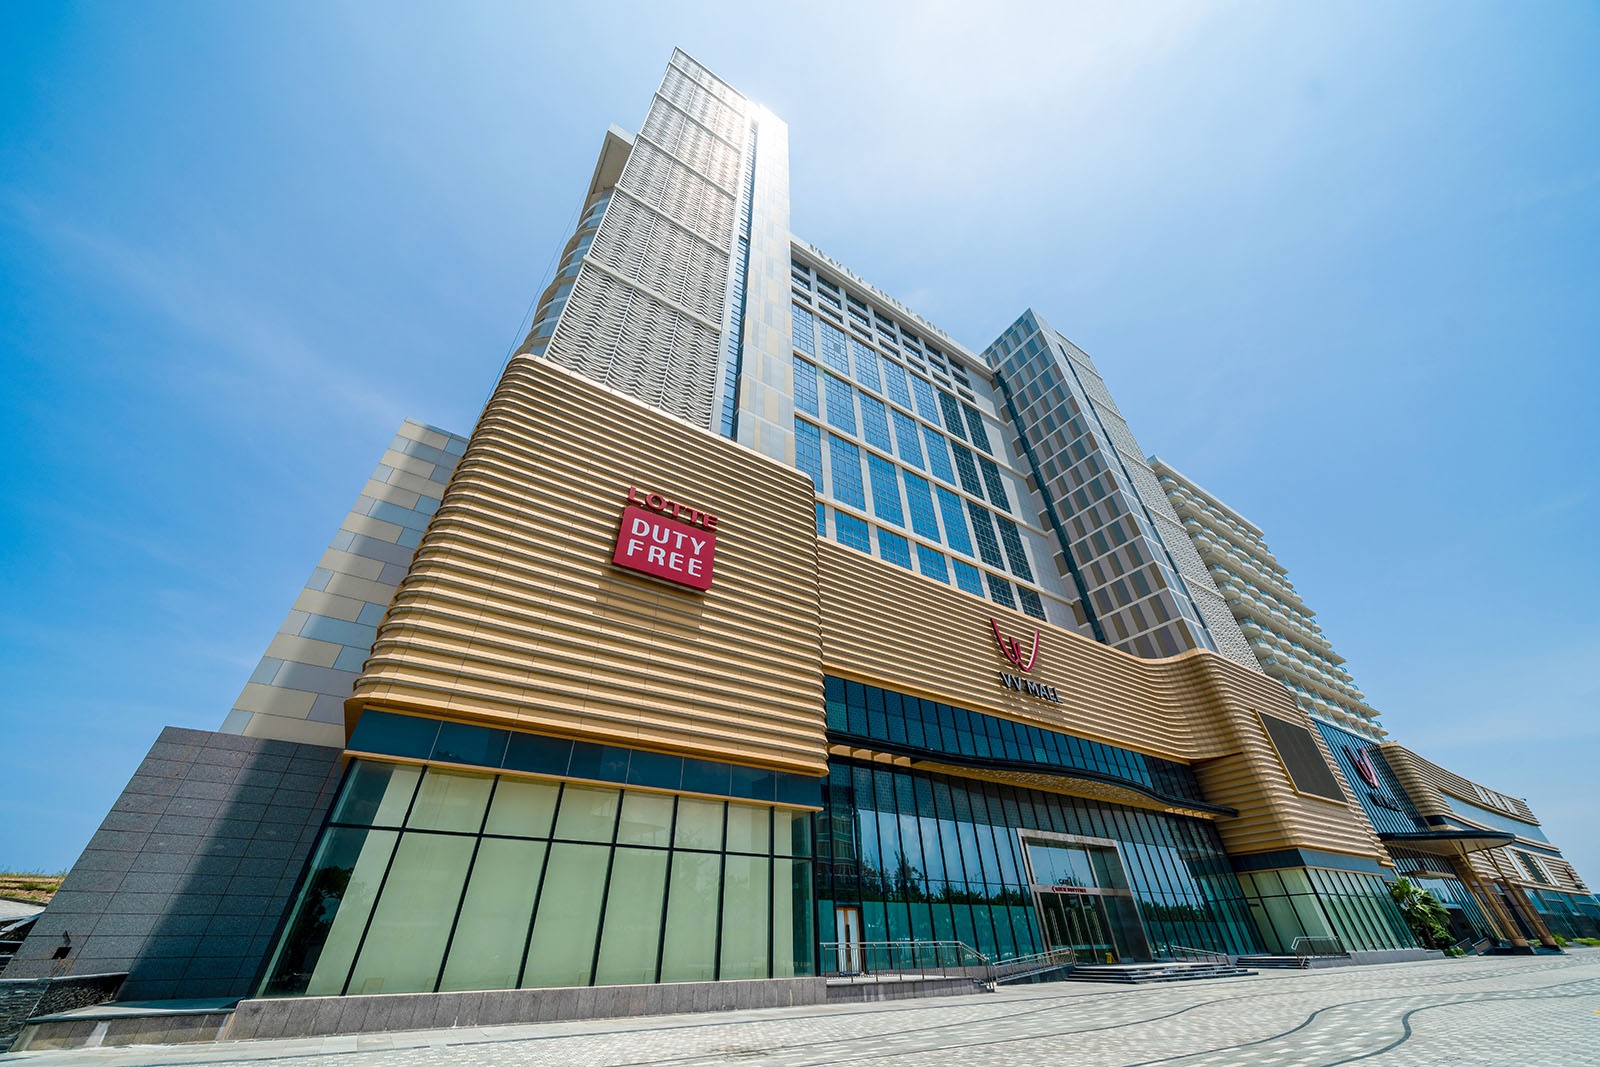 Lotte opens fourth duty-free in Danang